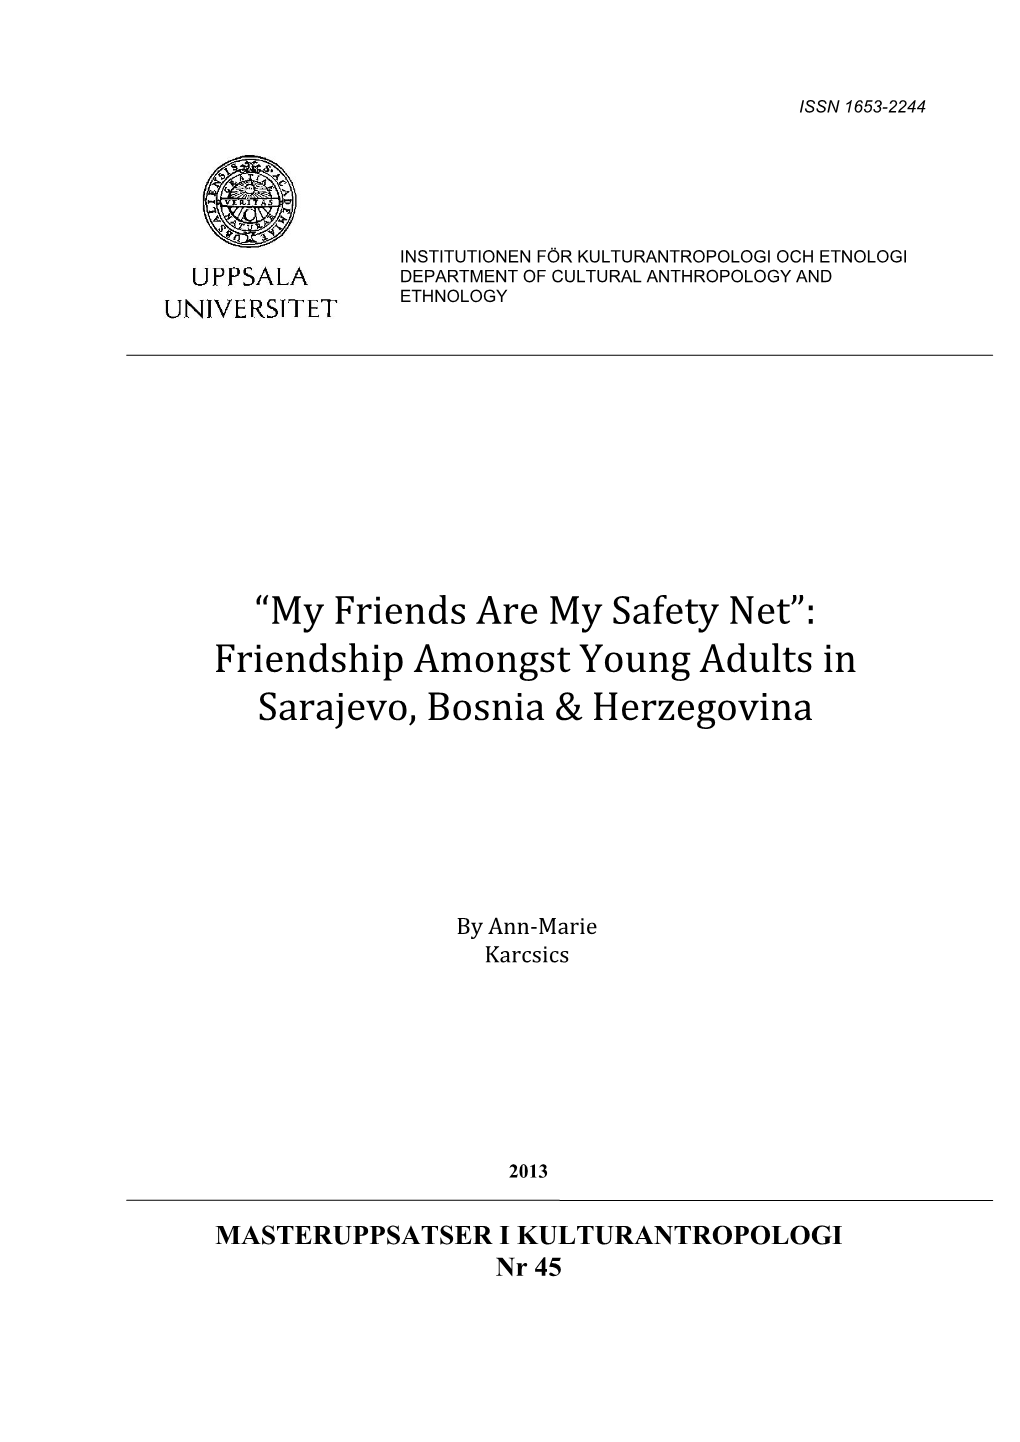 Friendship Amongst Young Adults in Sarajevo, Bosnia & Herzegovina